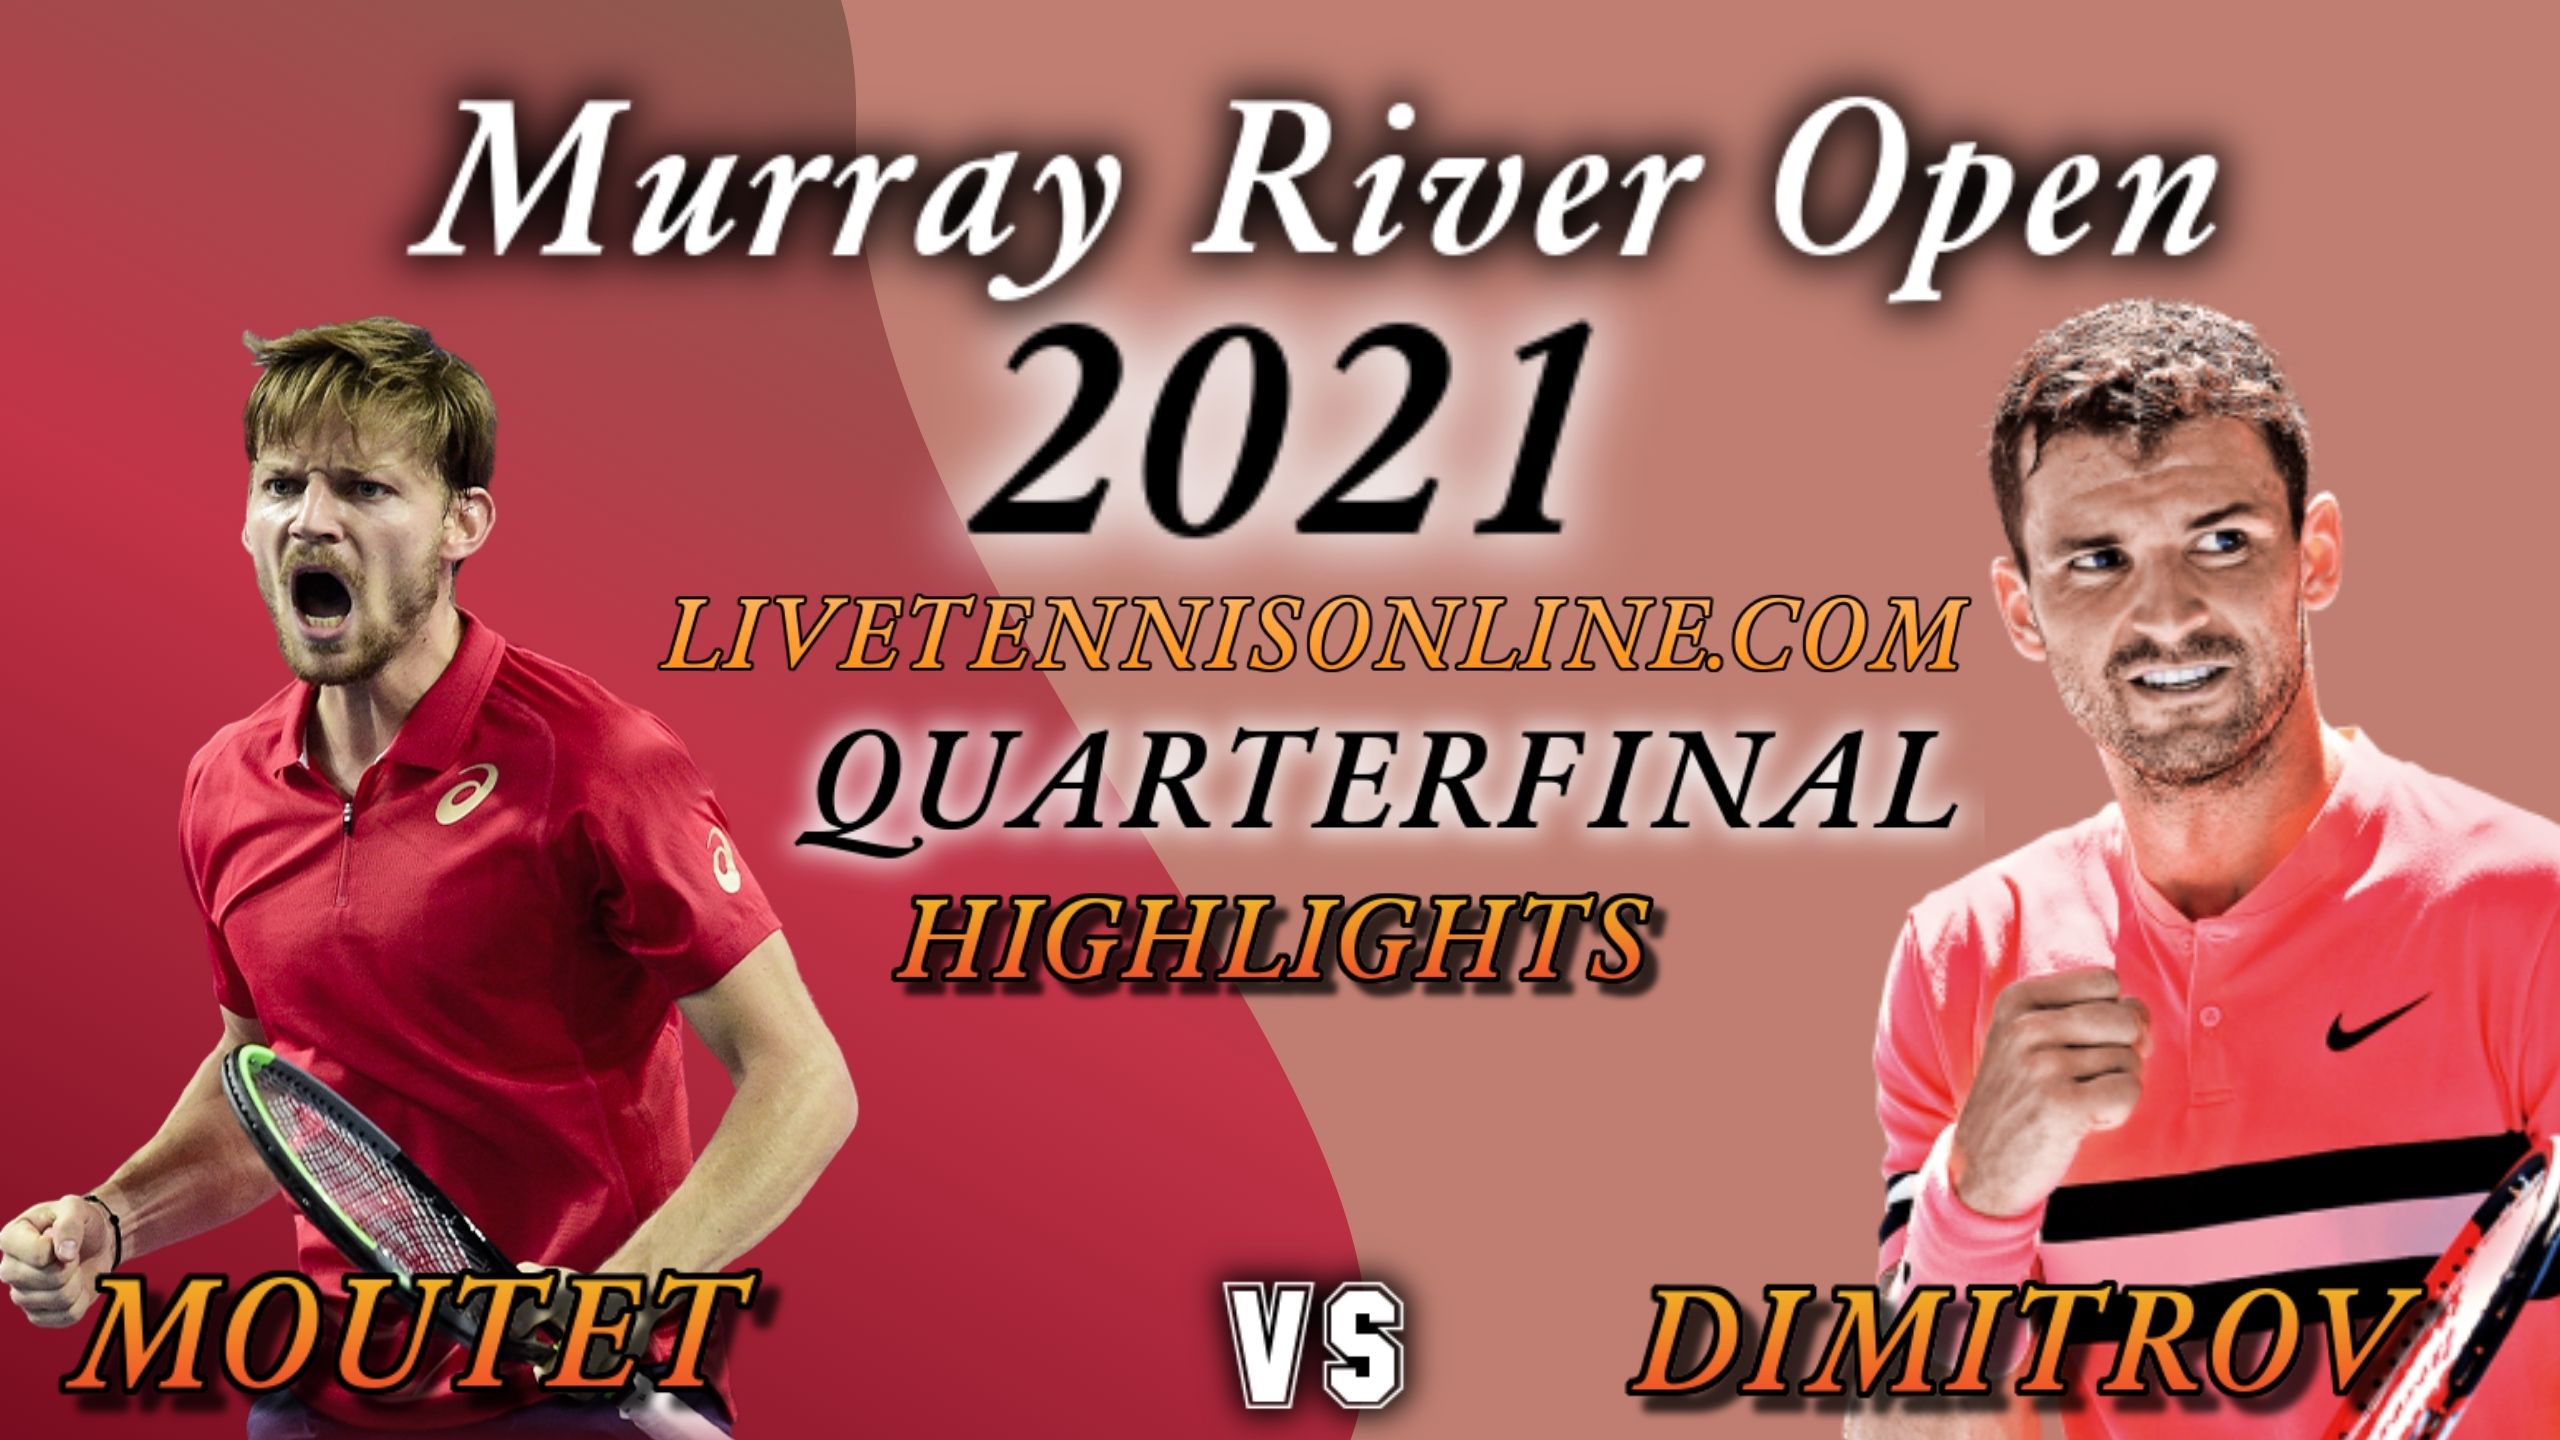 Moutet Vs Dimitrov Quarterfinal Highlights 2021